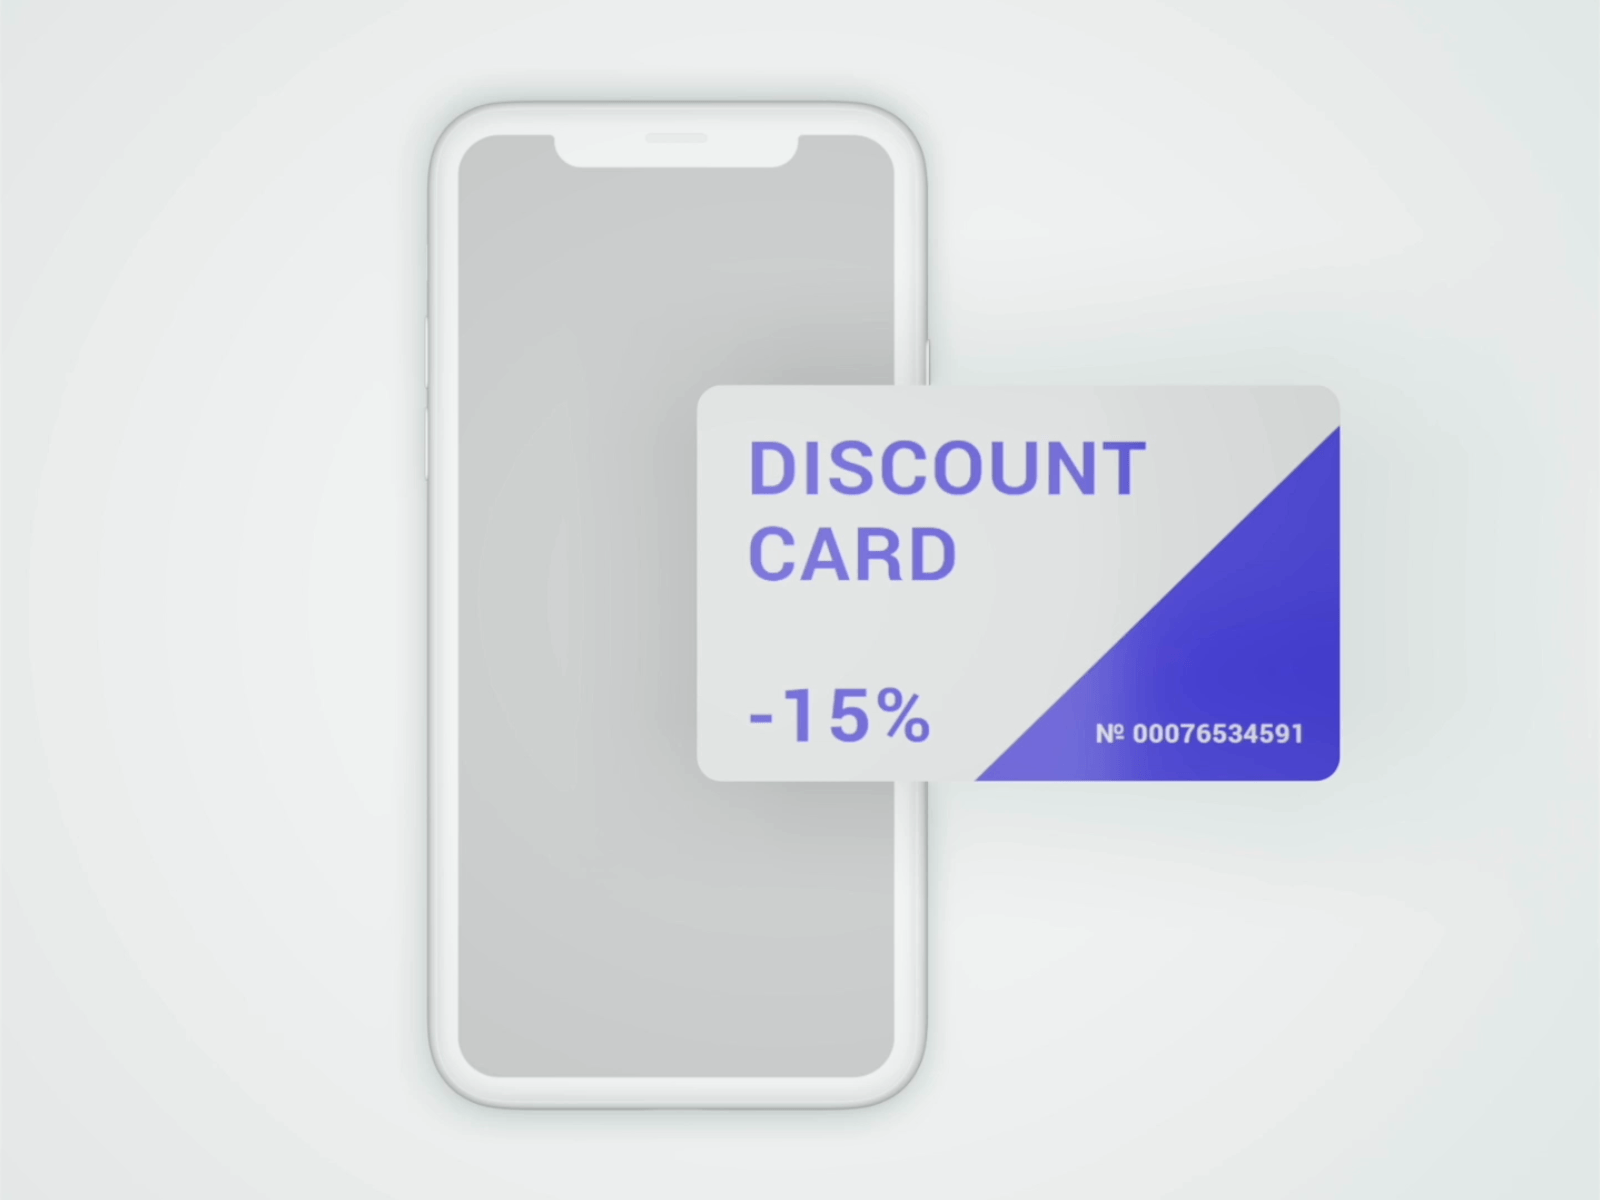 Discount card